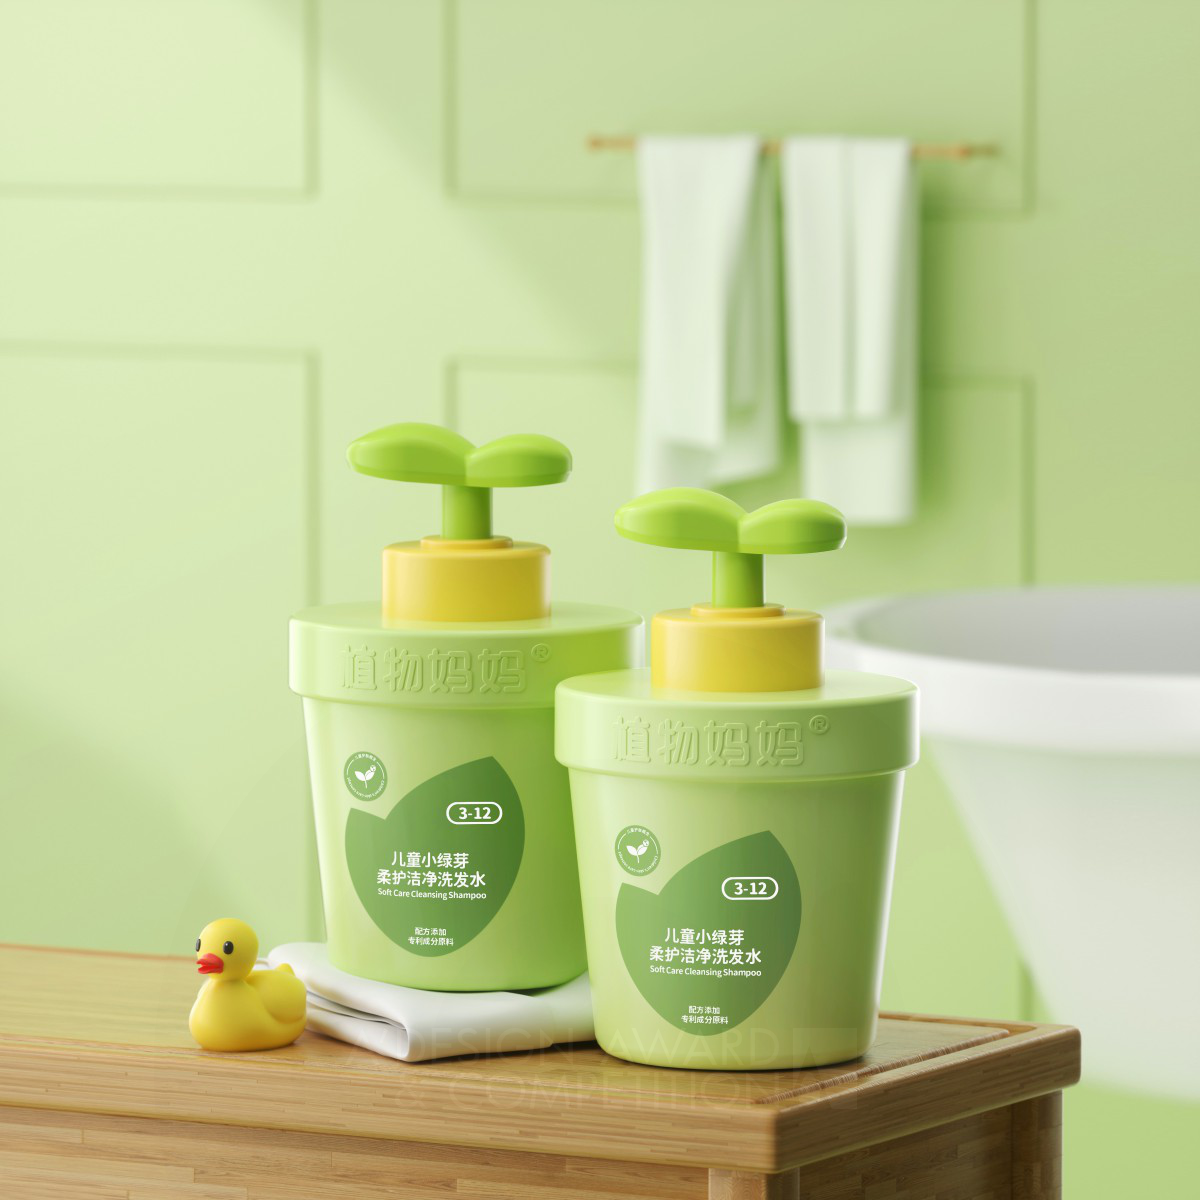 Little Green Bud Shampoo: A Packaging Revolution